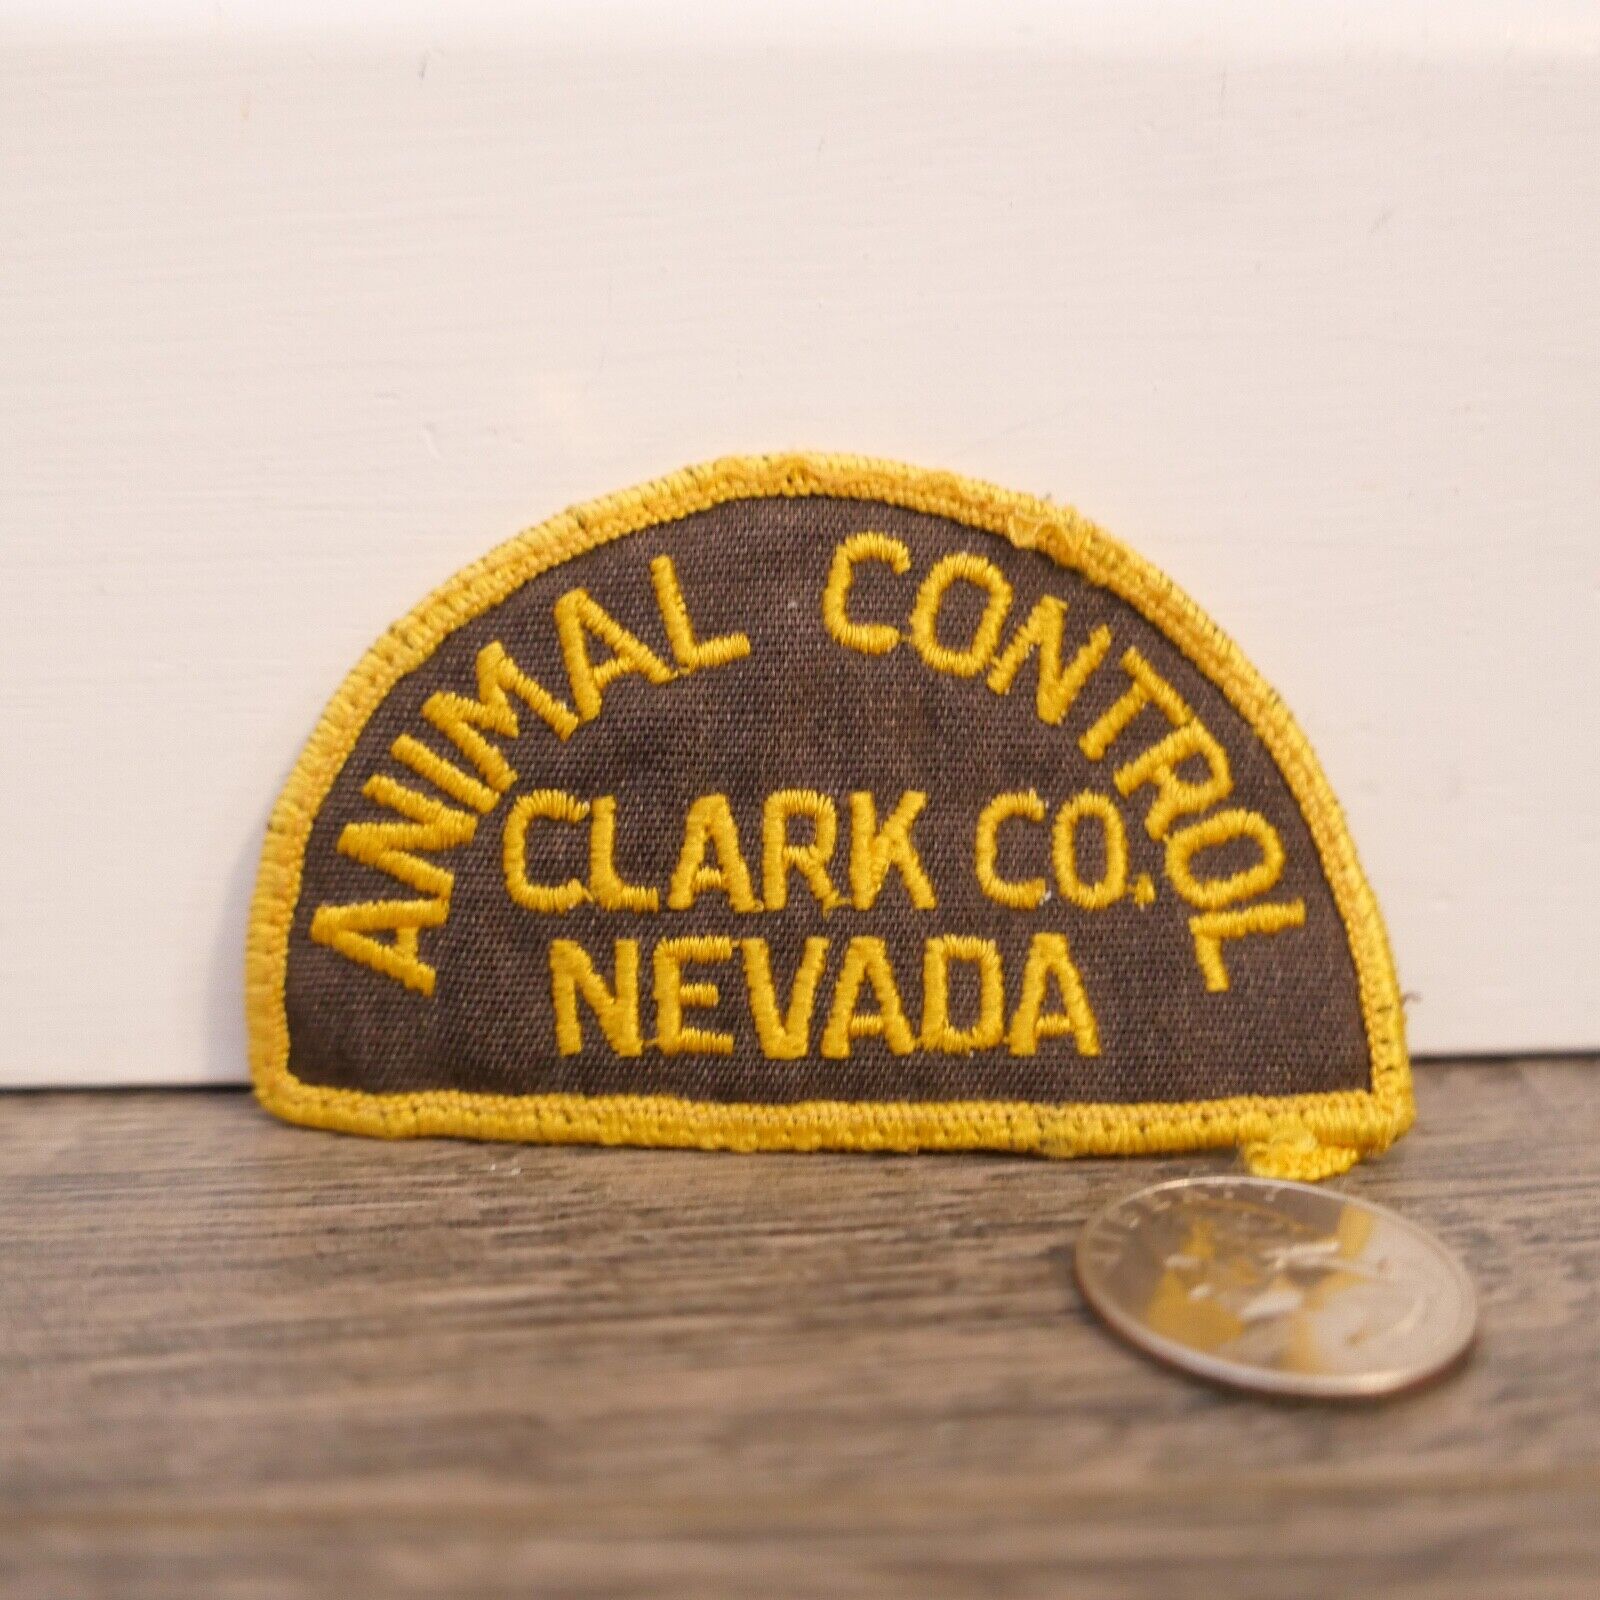 Vtg. CLARK COUNTY NEVADA Animal Control Patch  RARE